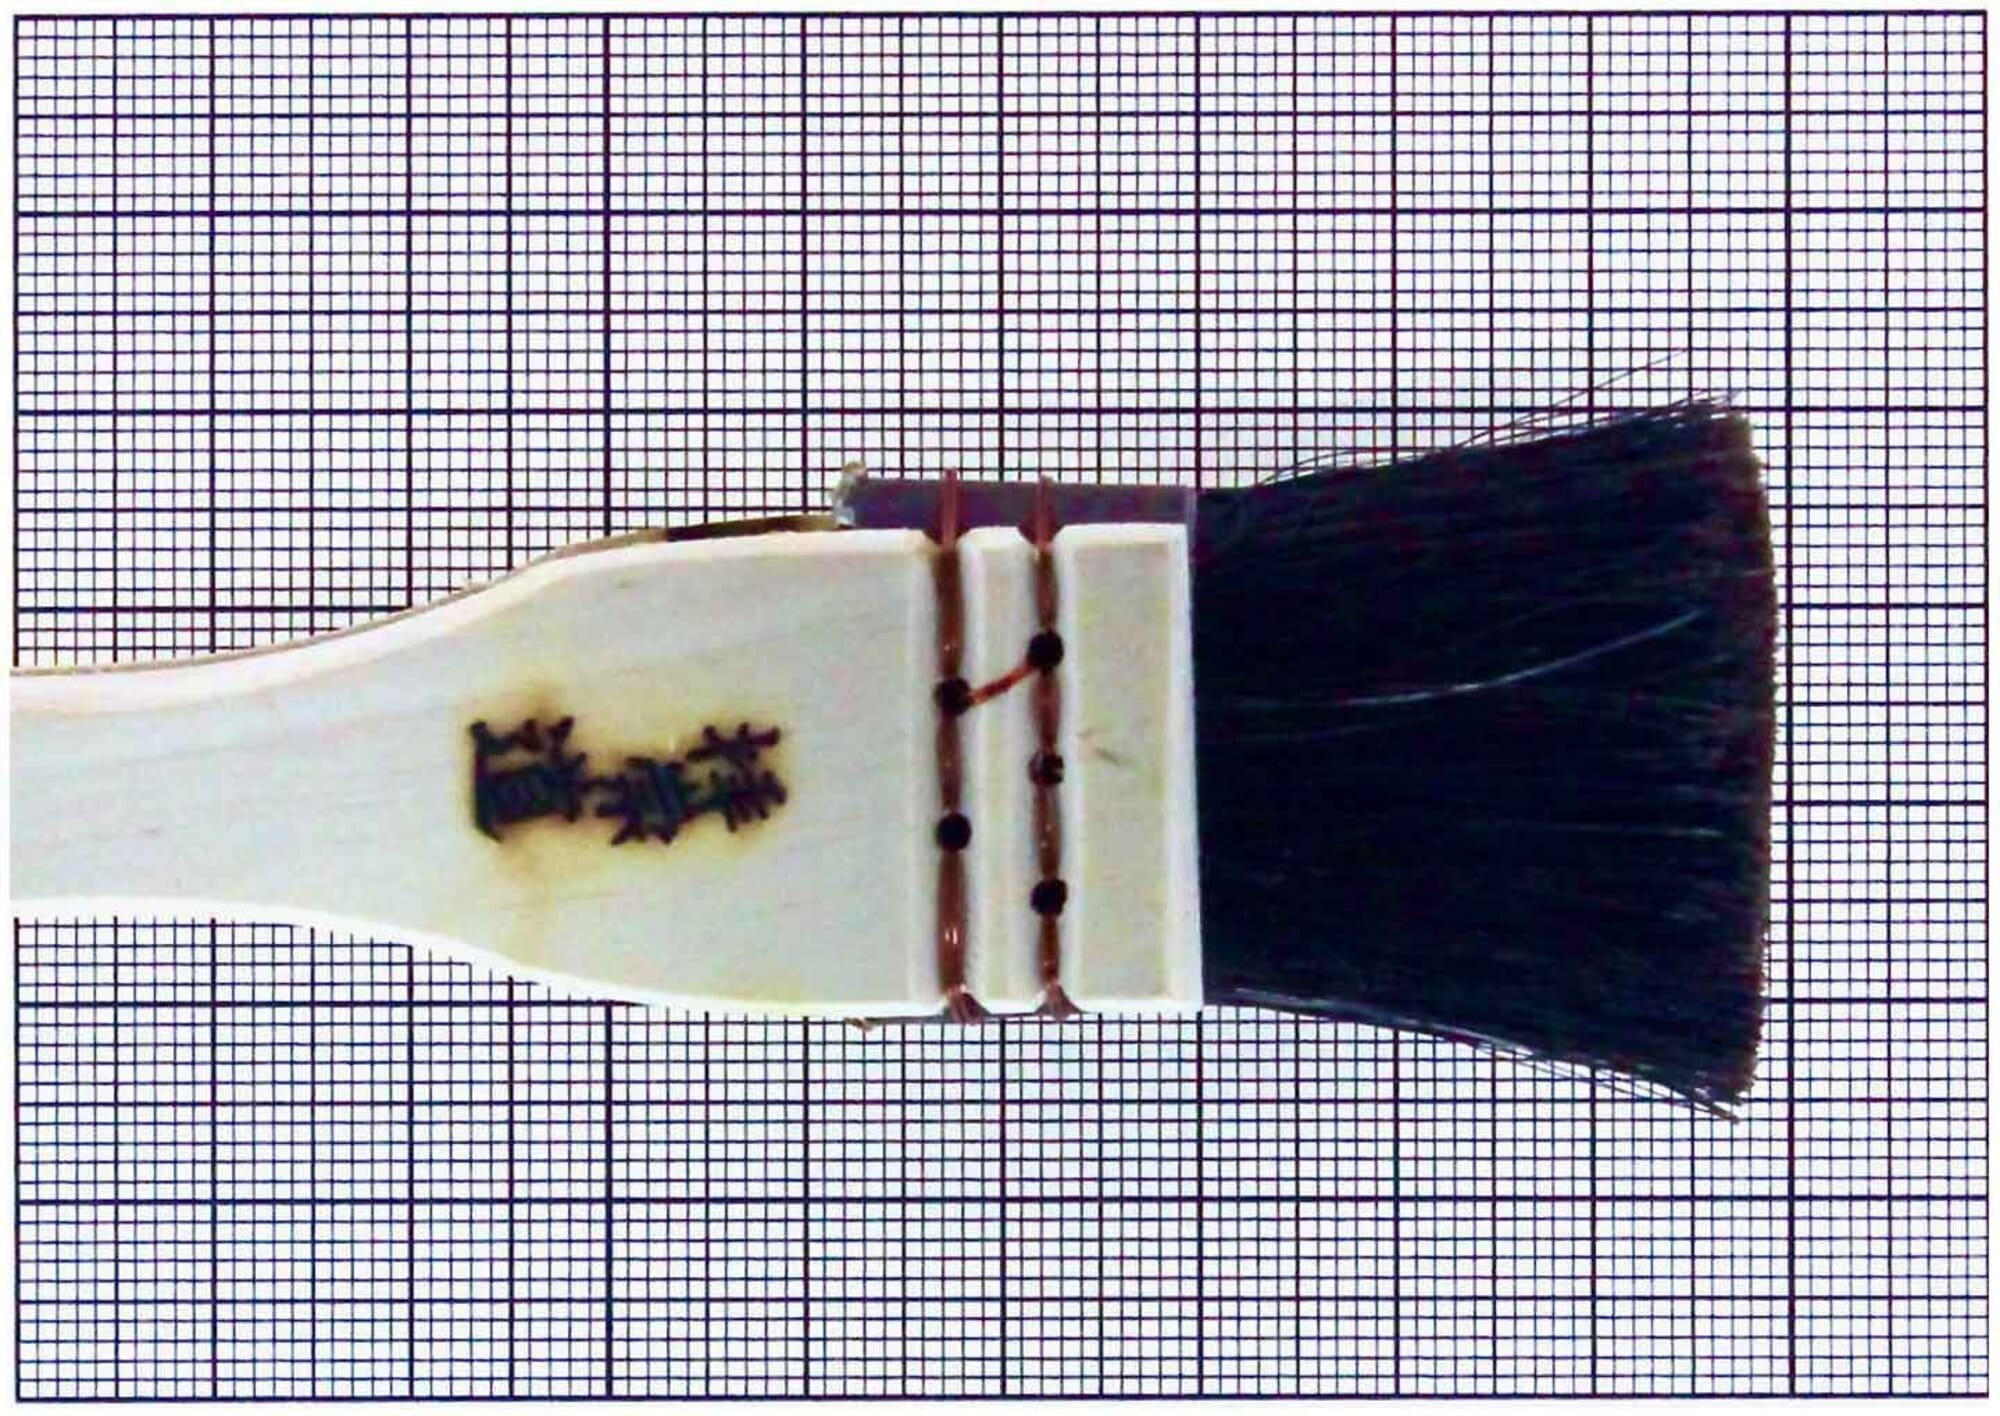 Michihamono 130mm Mokuhanga Pressing Burnishing Tool Round Disk Sosaku Bamboo Beta Baren, with Bamboo Leaf Cover, for Woodblock Printing